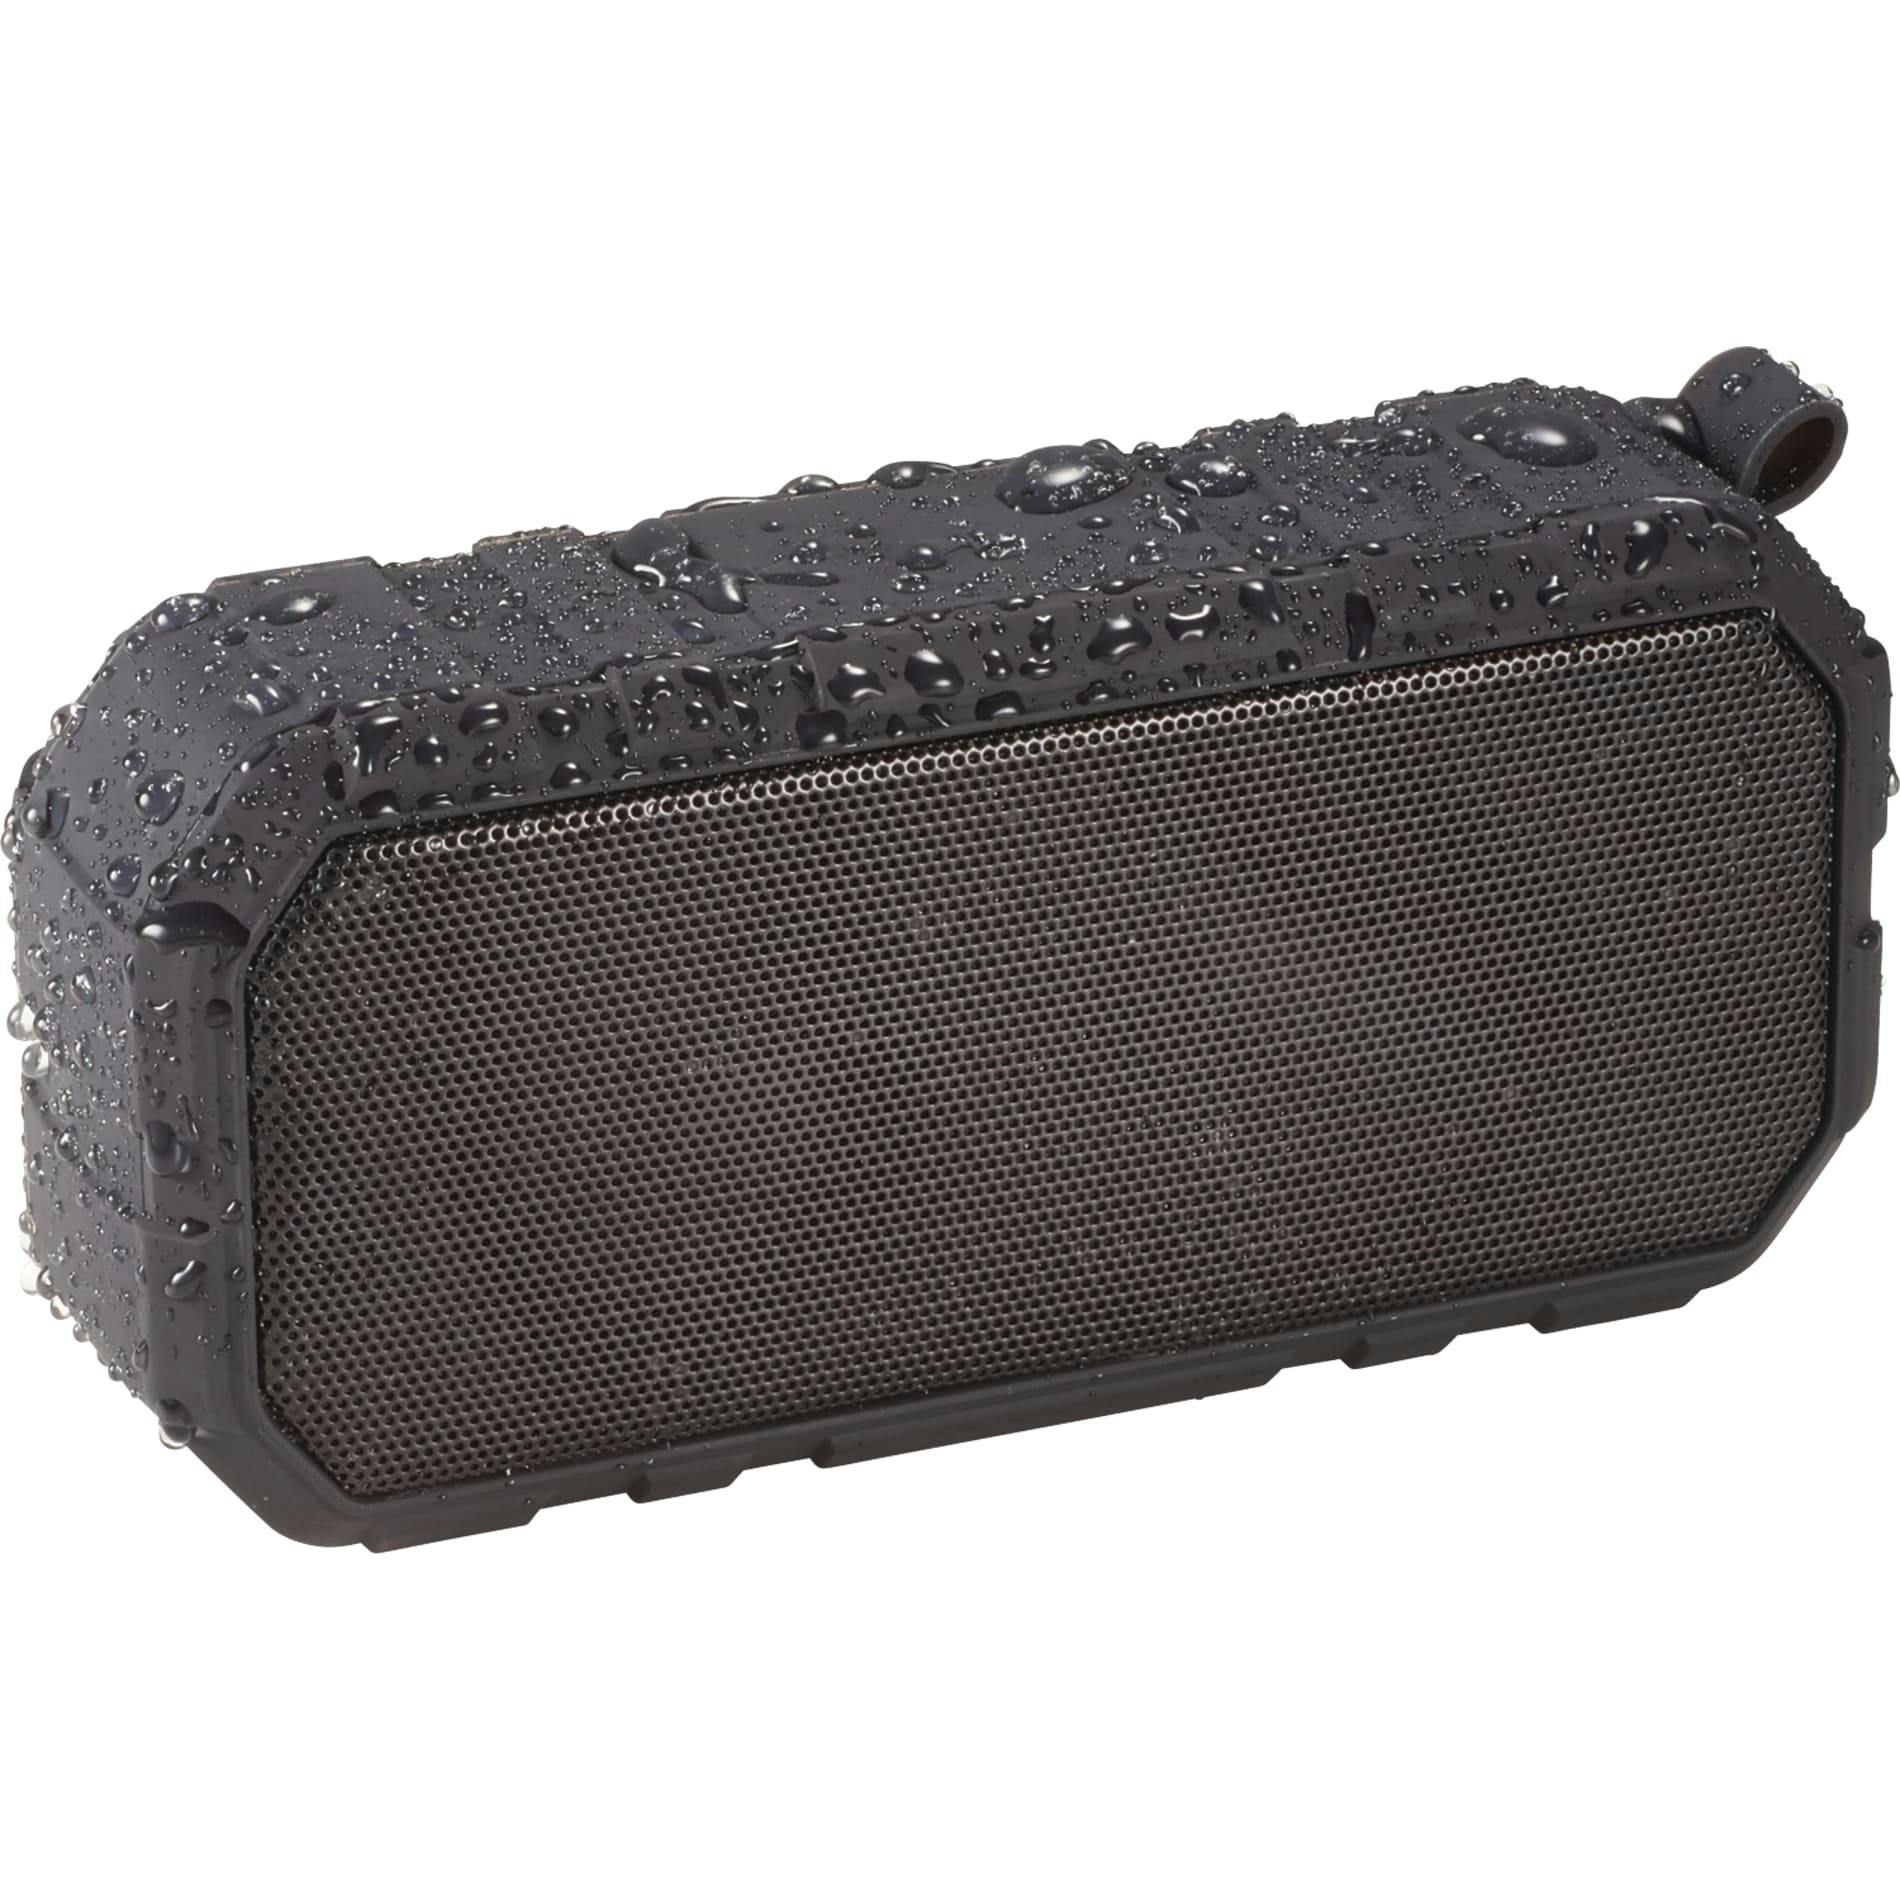 Brick Outdoor Waterproof Bluetooth Speaker - additional Image 6